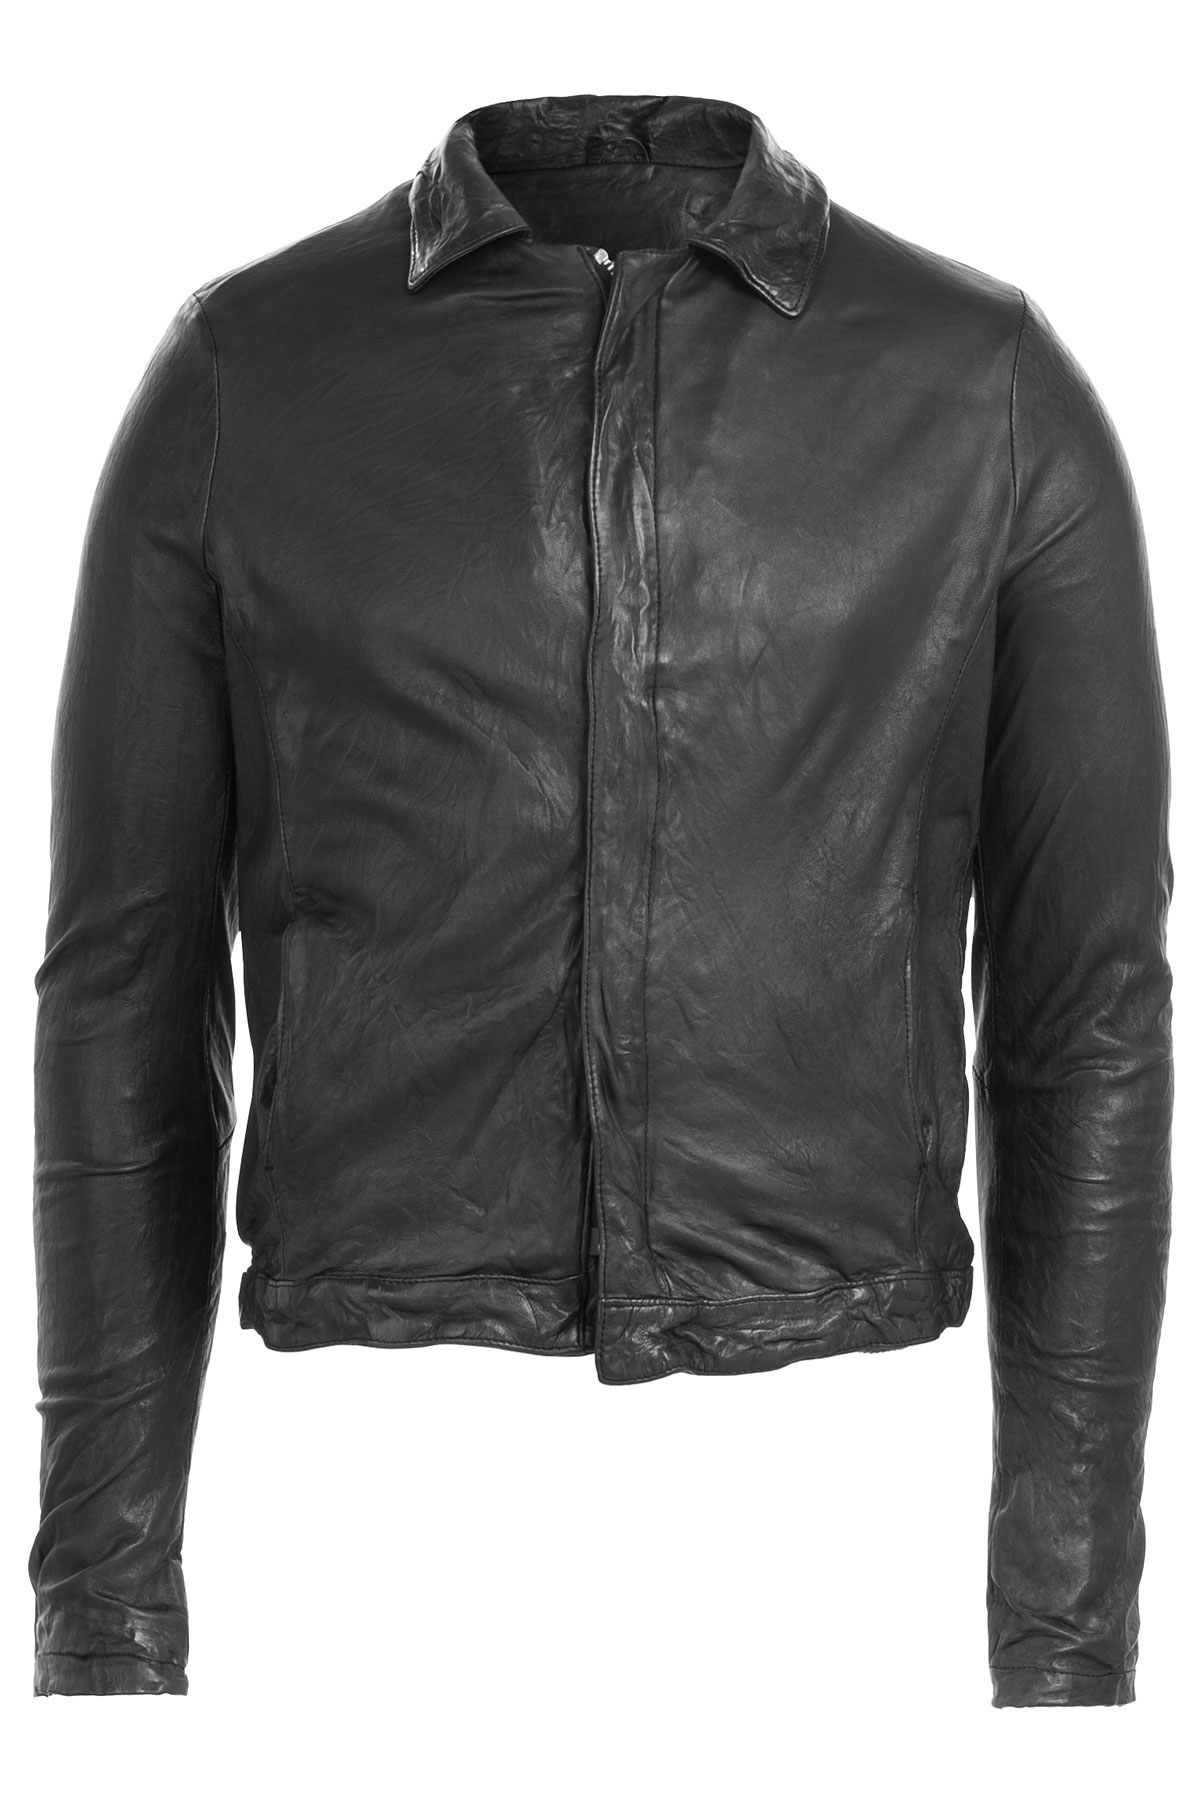 Giorgio Brato | Leather Jacket - Black for Men | Lyst